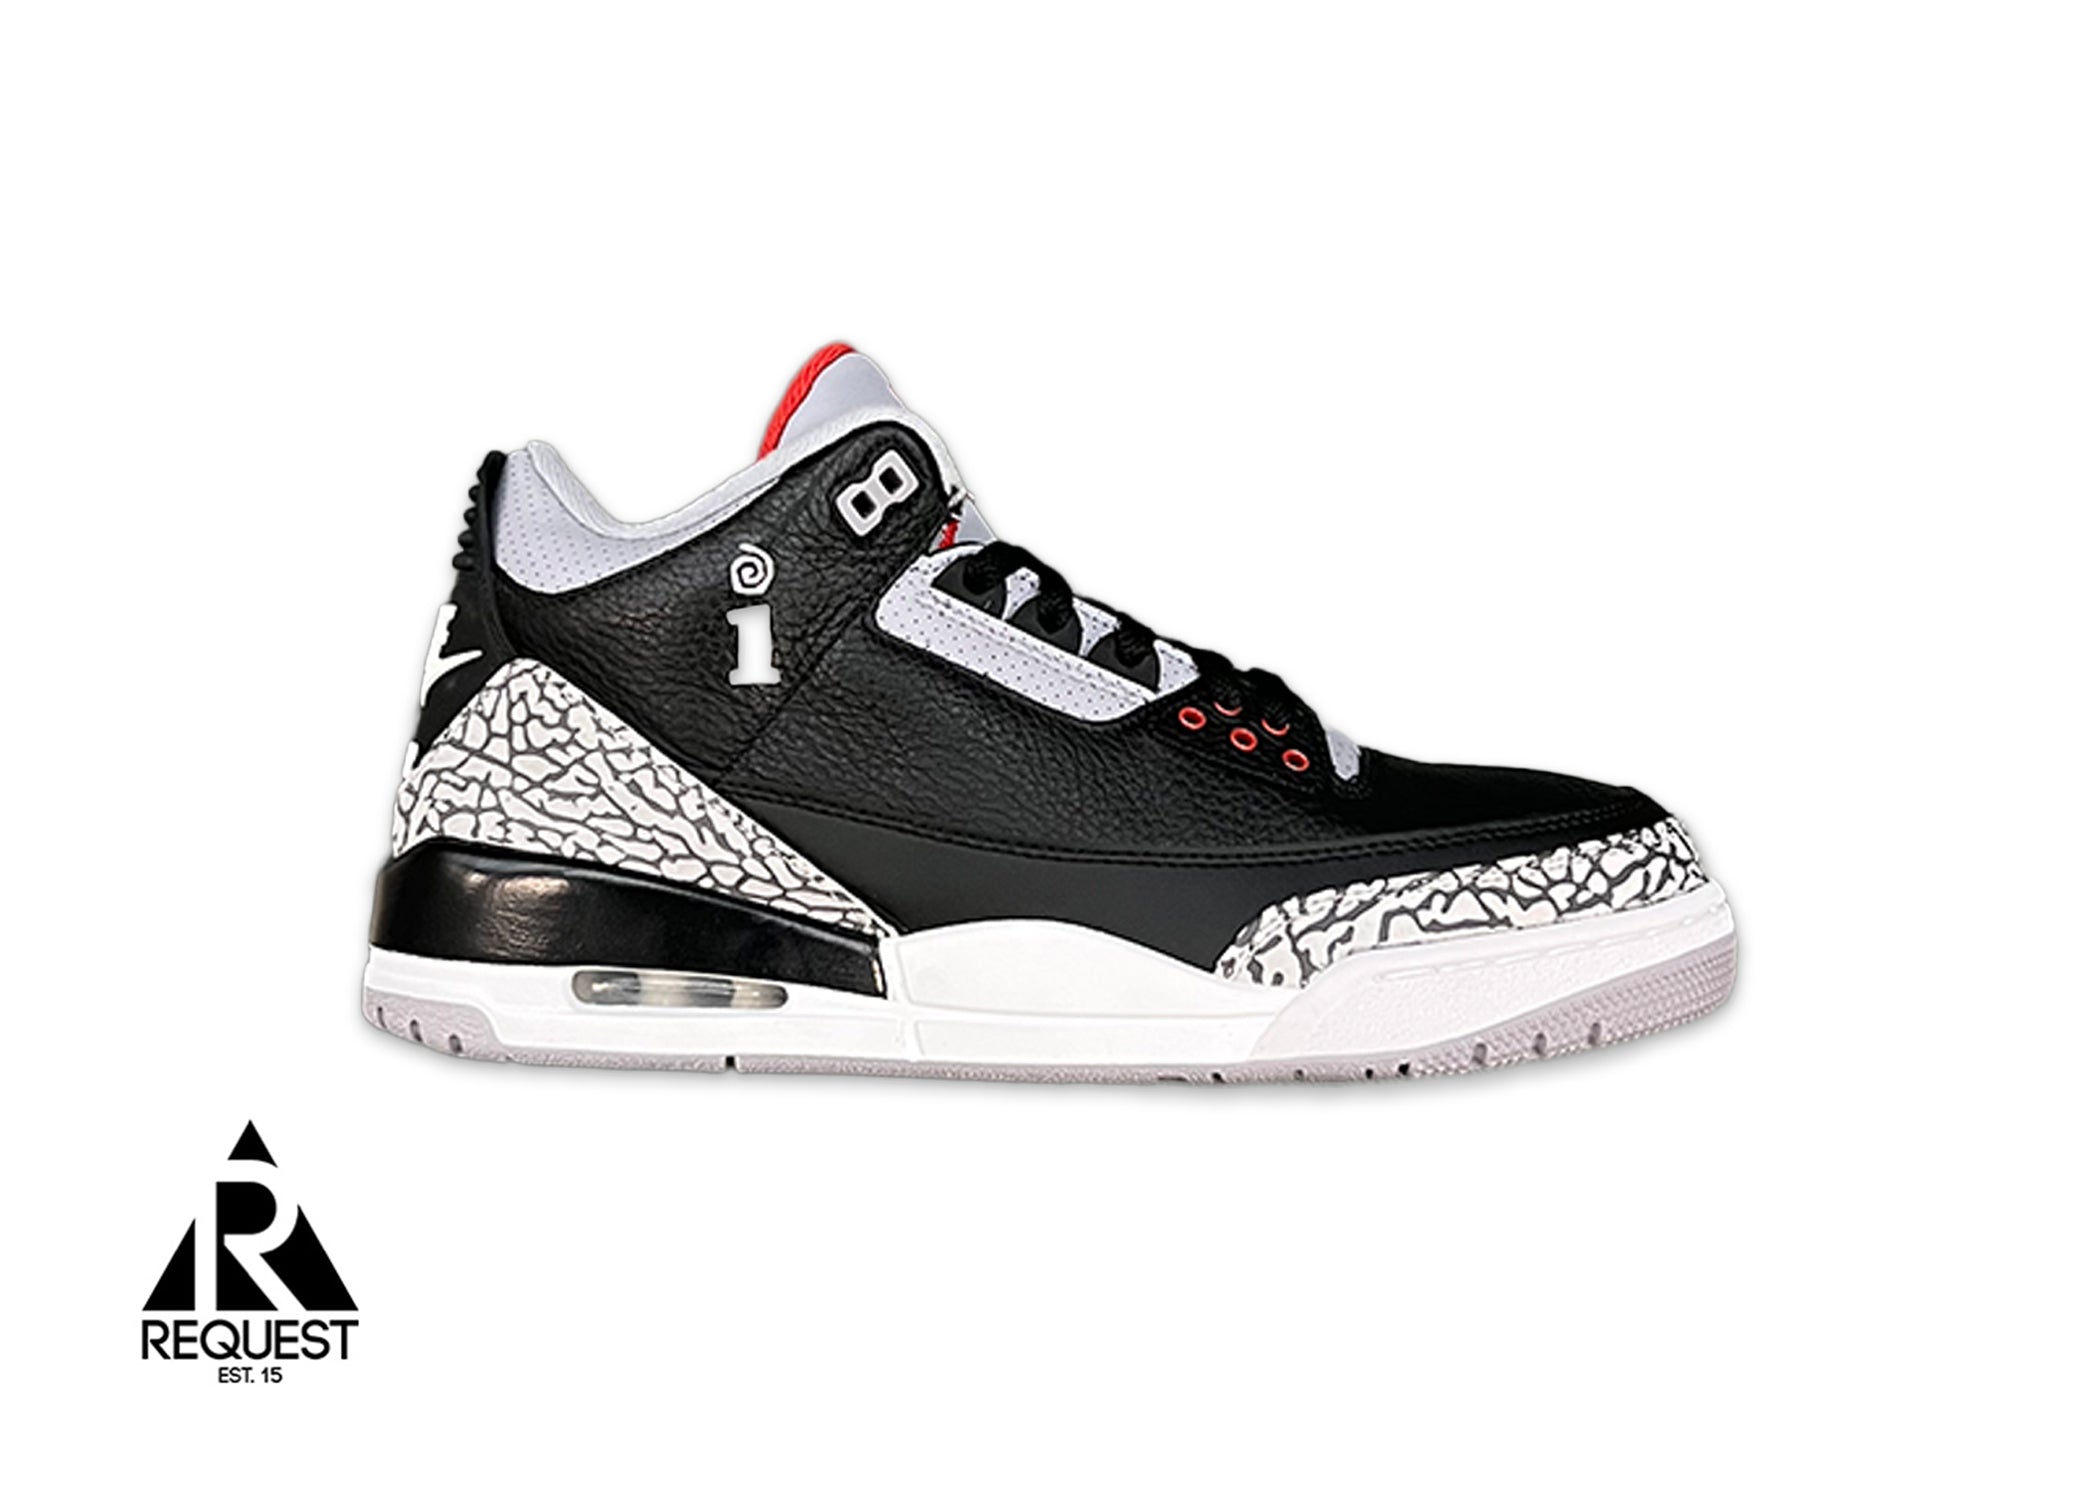 Air Jordan 3 Retro "Interscope Records Black Cement"